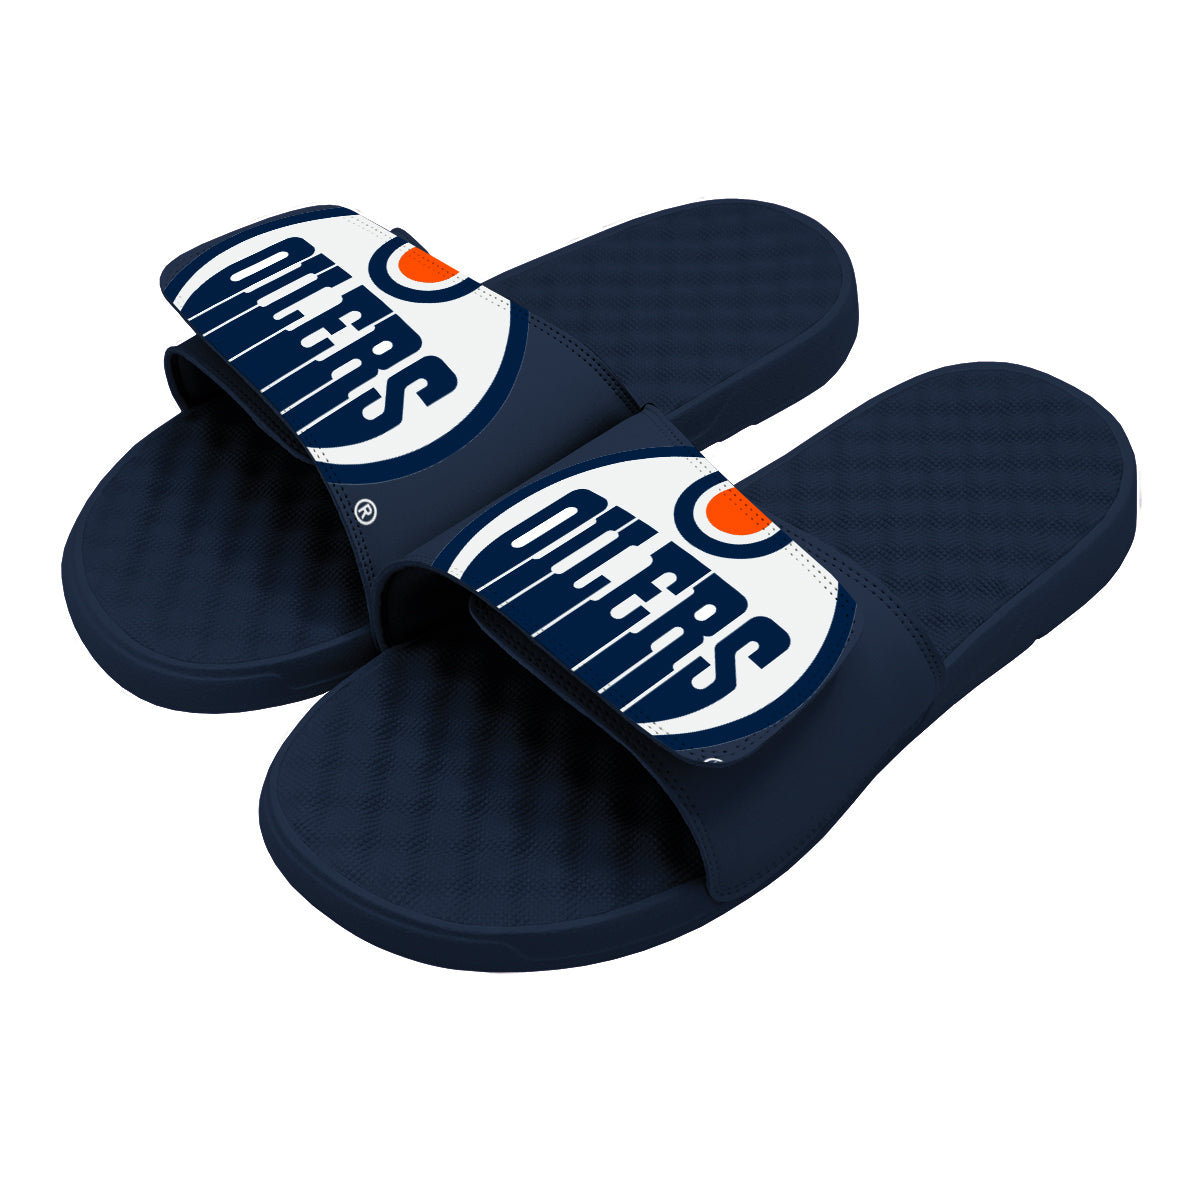 Edmonton Oilers Blown Up Slides